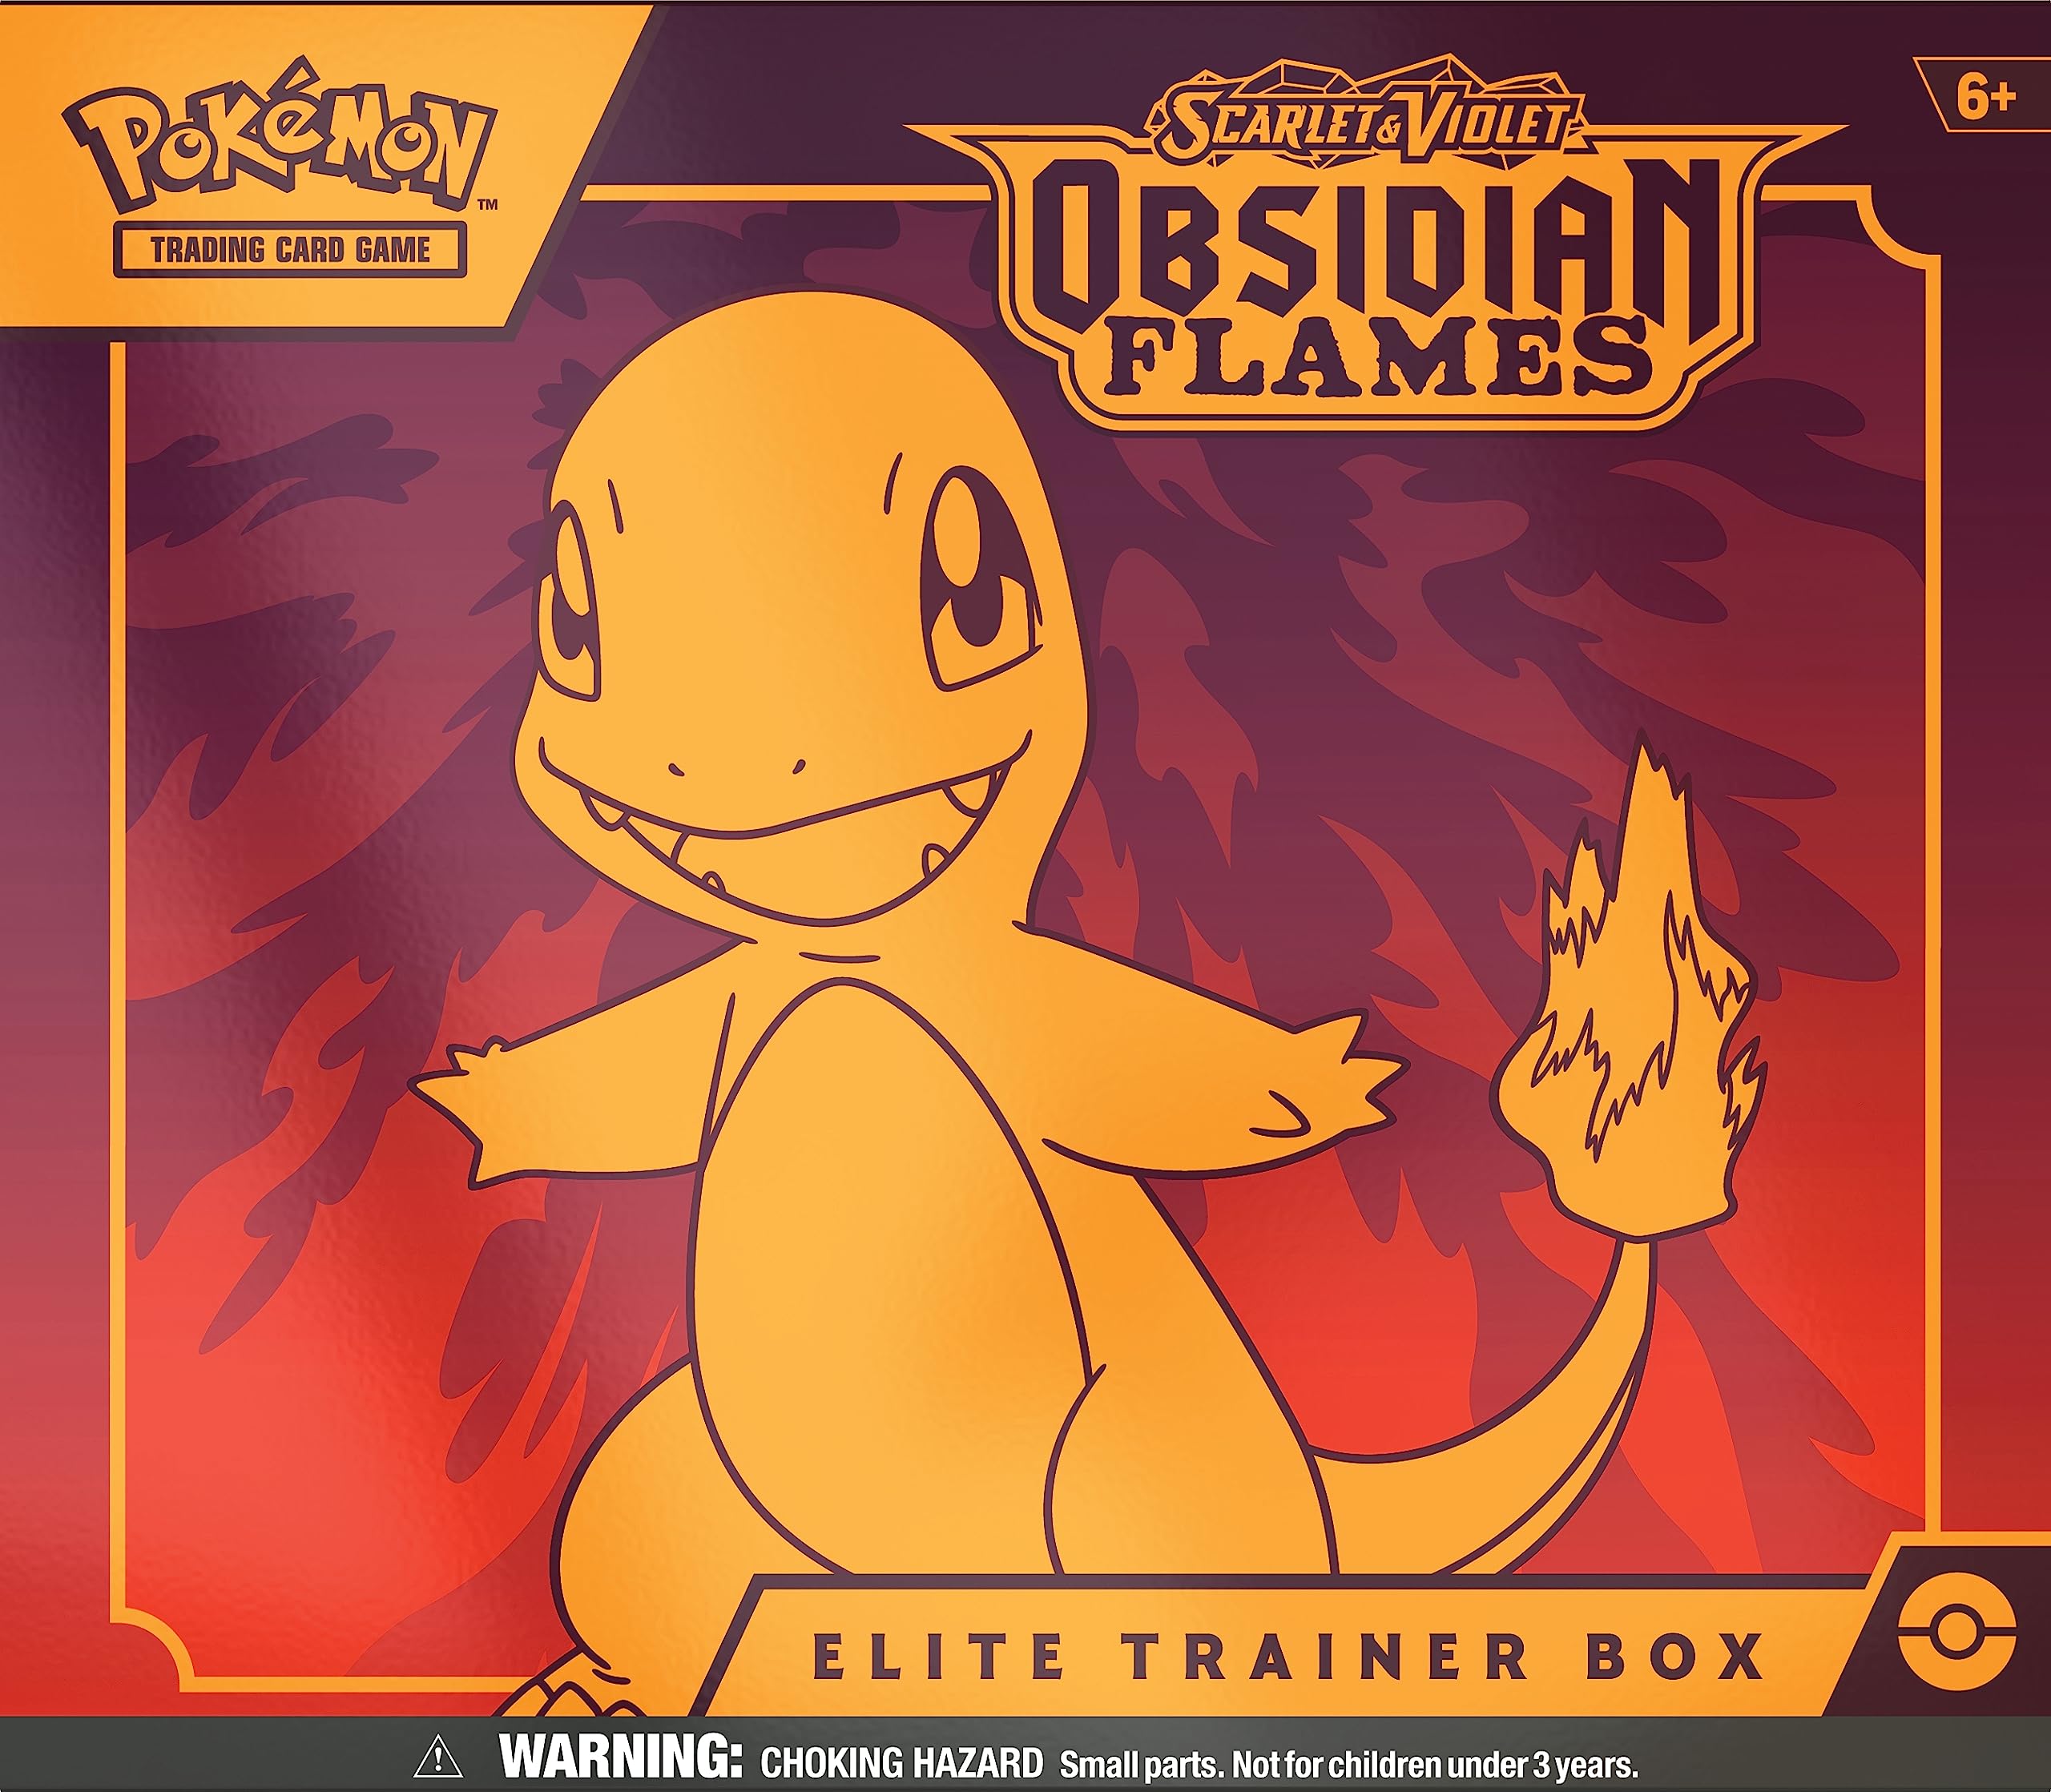 Pokemon Scarlet & Violet 3 Obsidian Flames Elite Trainer Box